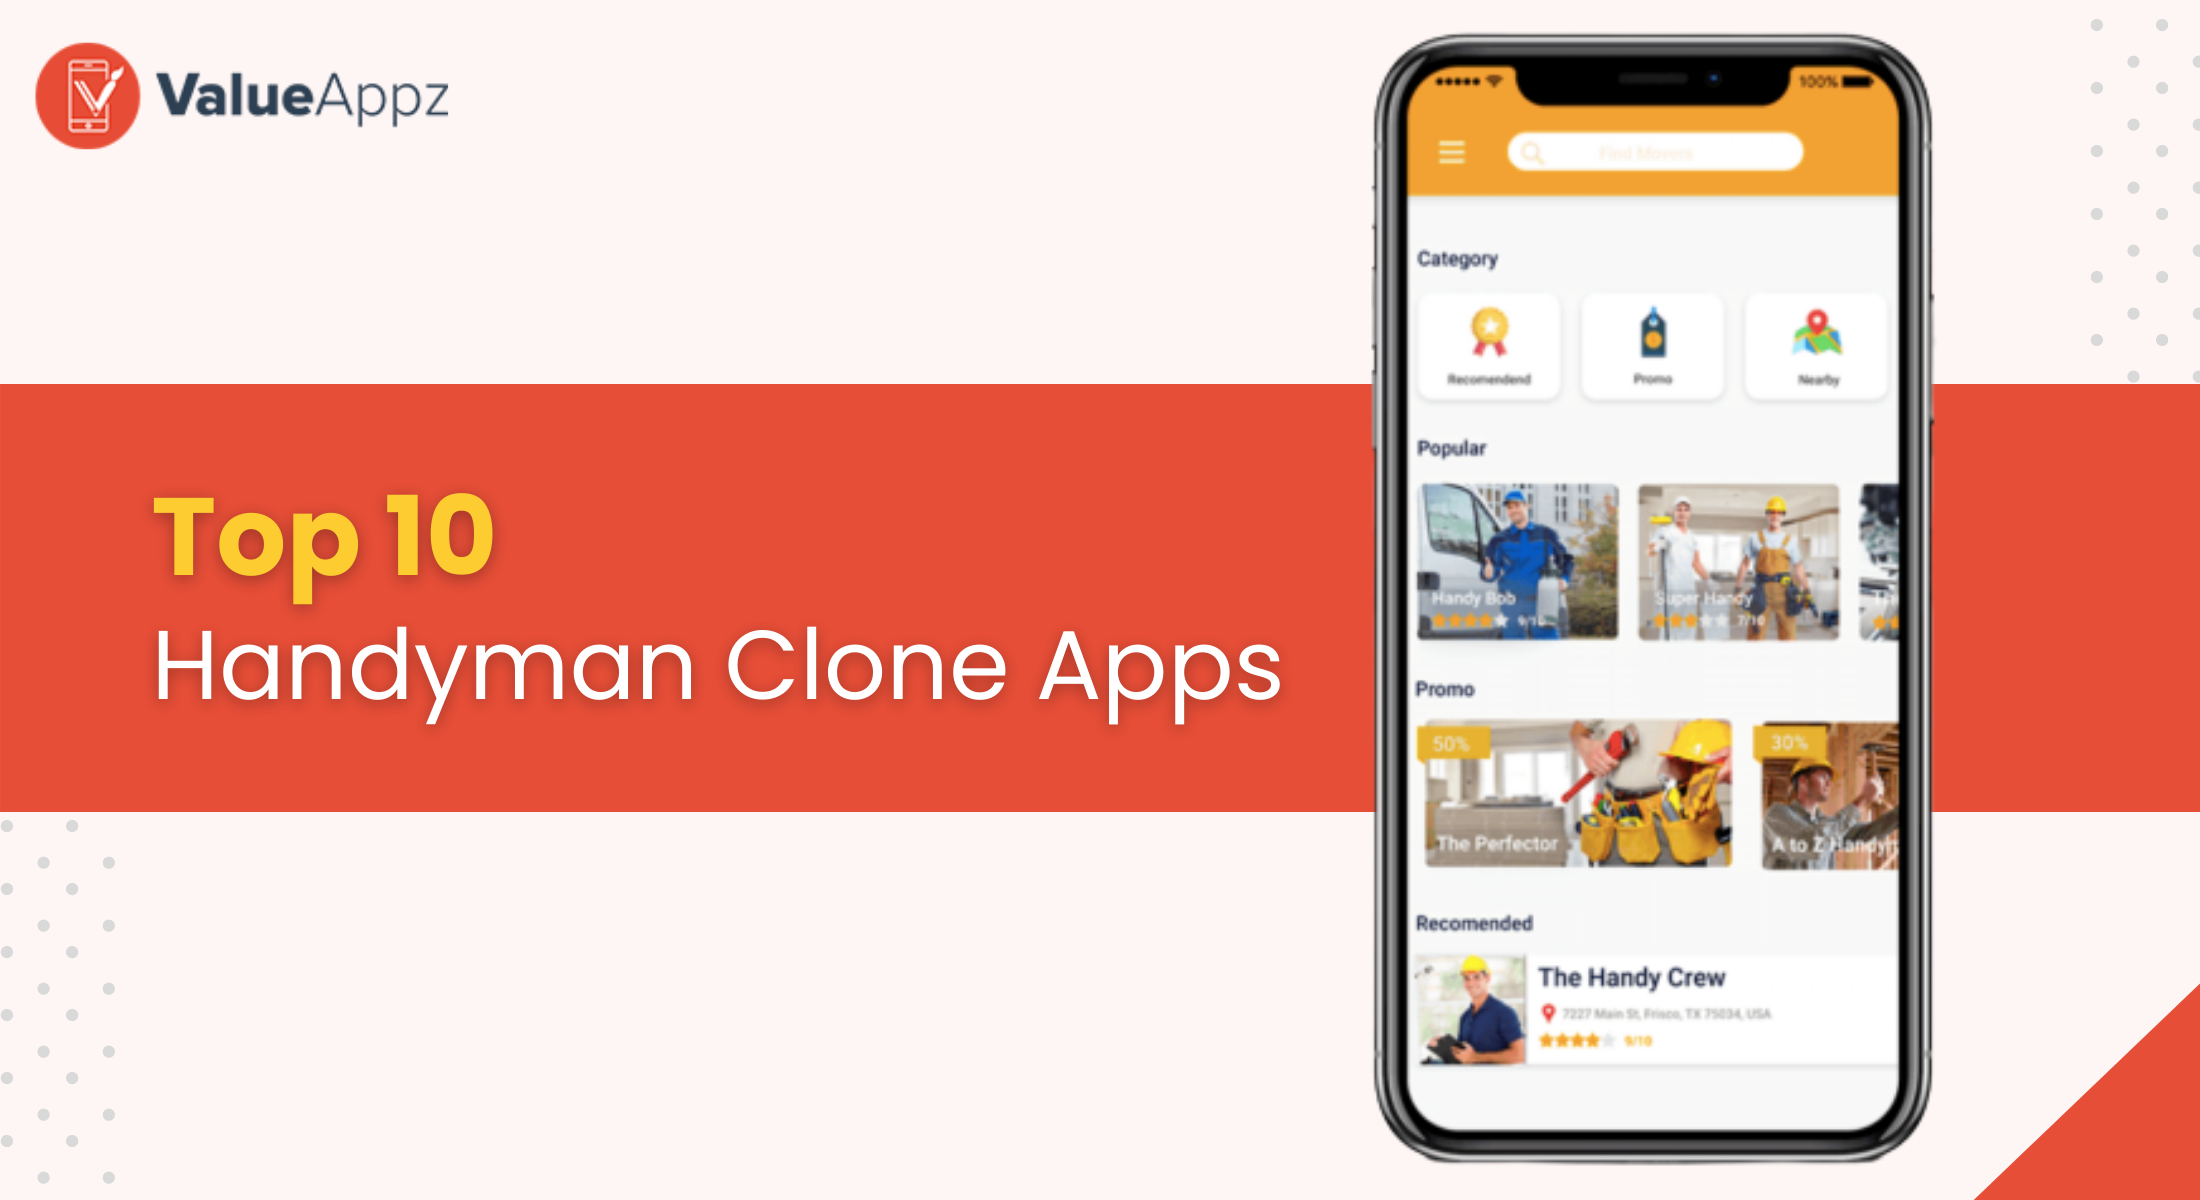 Top 10 Handyman Clone Apps